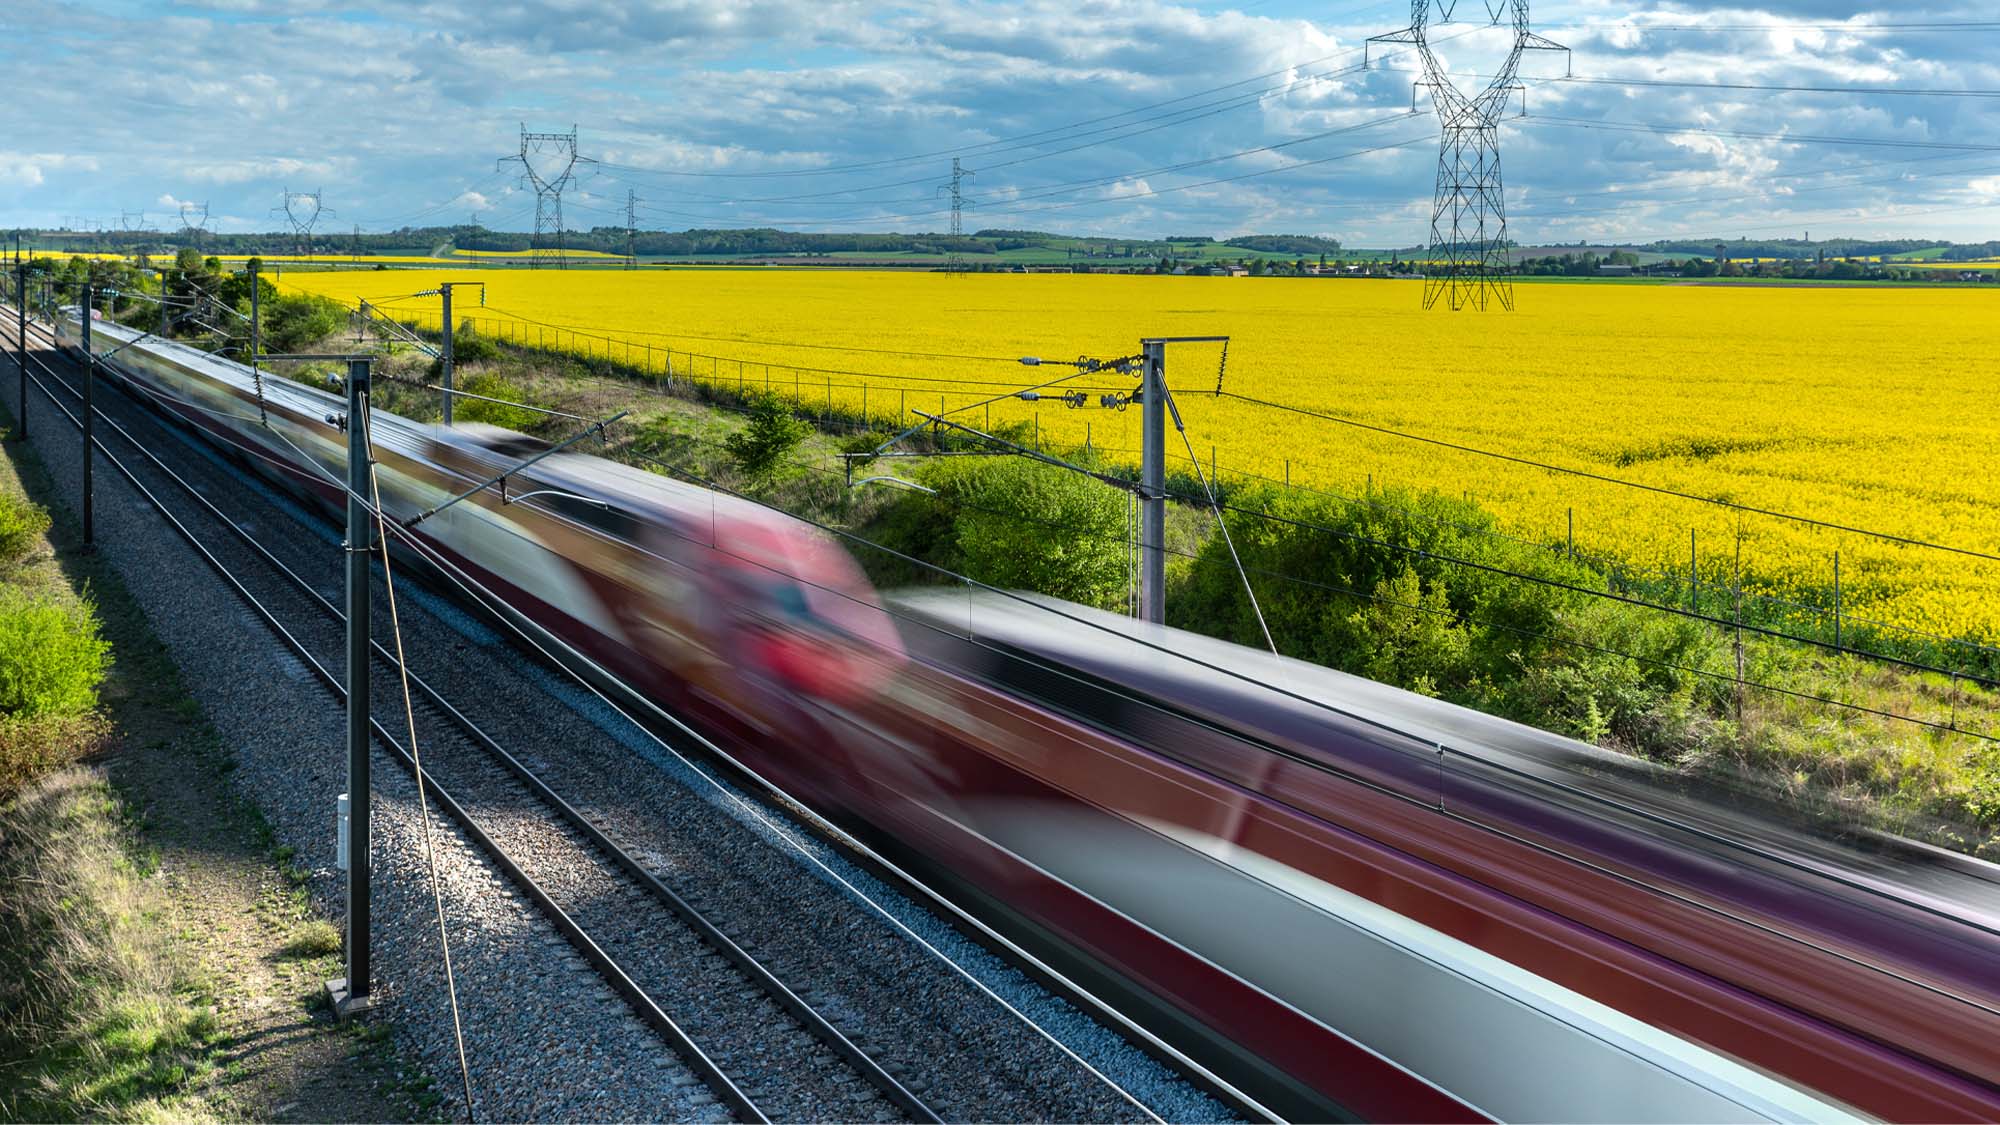 High-speed rail line. Credit: Shutterstock